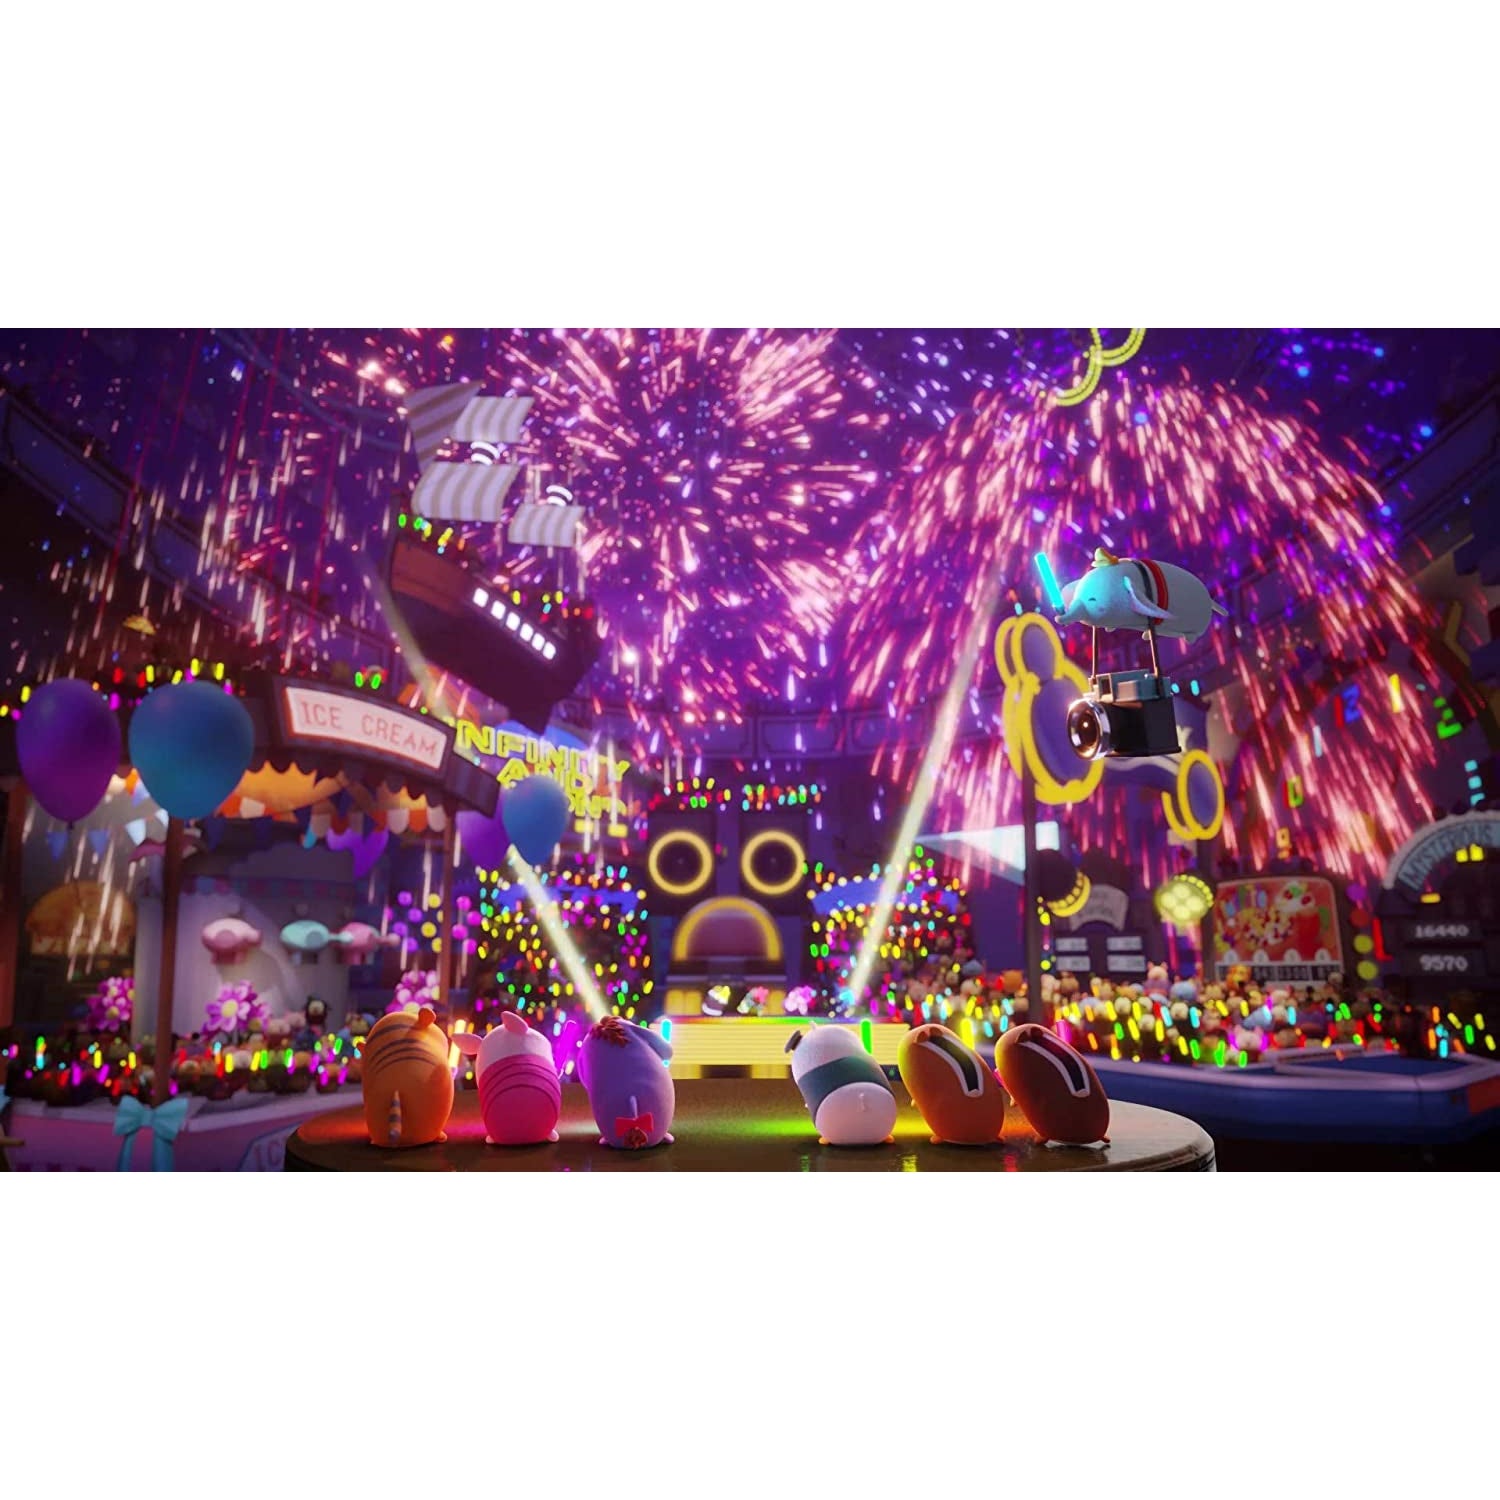 Disney Tsum Festival (Nintendo Switch)